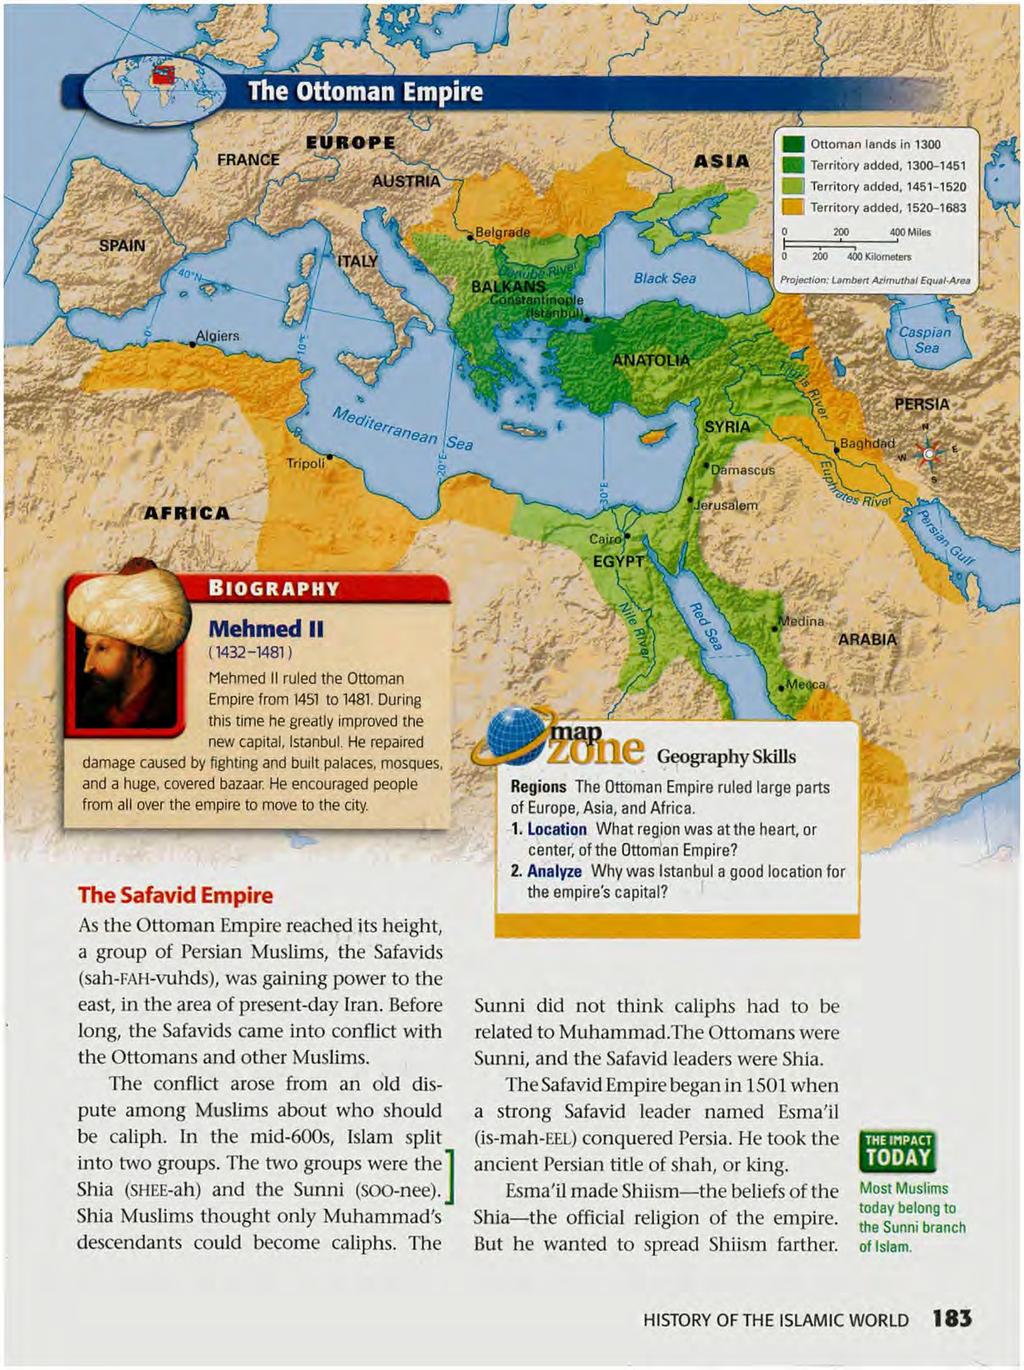 The Ottoman Empire FRANCE EUROPE AUSTRIA ASIA Ottoman lands in 1300 Territory added, 1300-1451 1 Territory added, 1451-1520 Territory added, 1520-1683 Belgrade 400 Miles BALKANS Constantinople Black